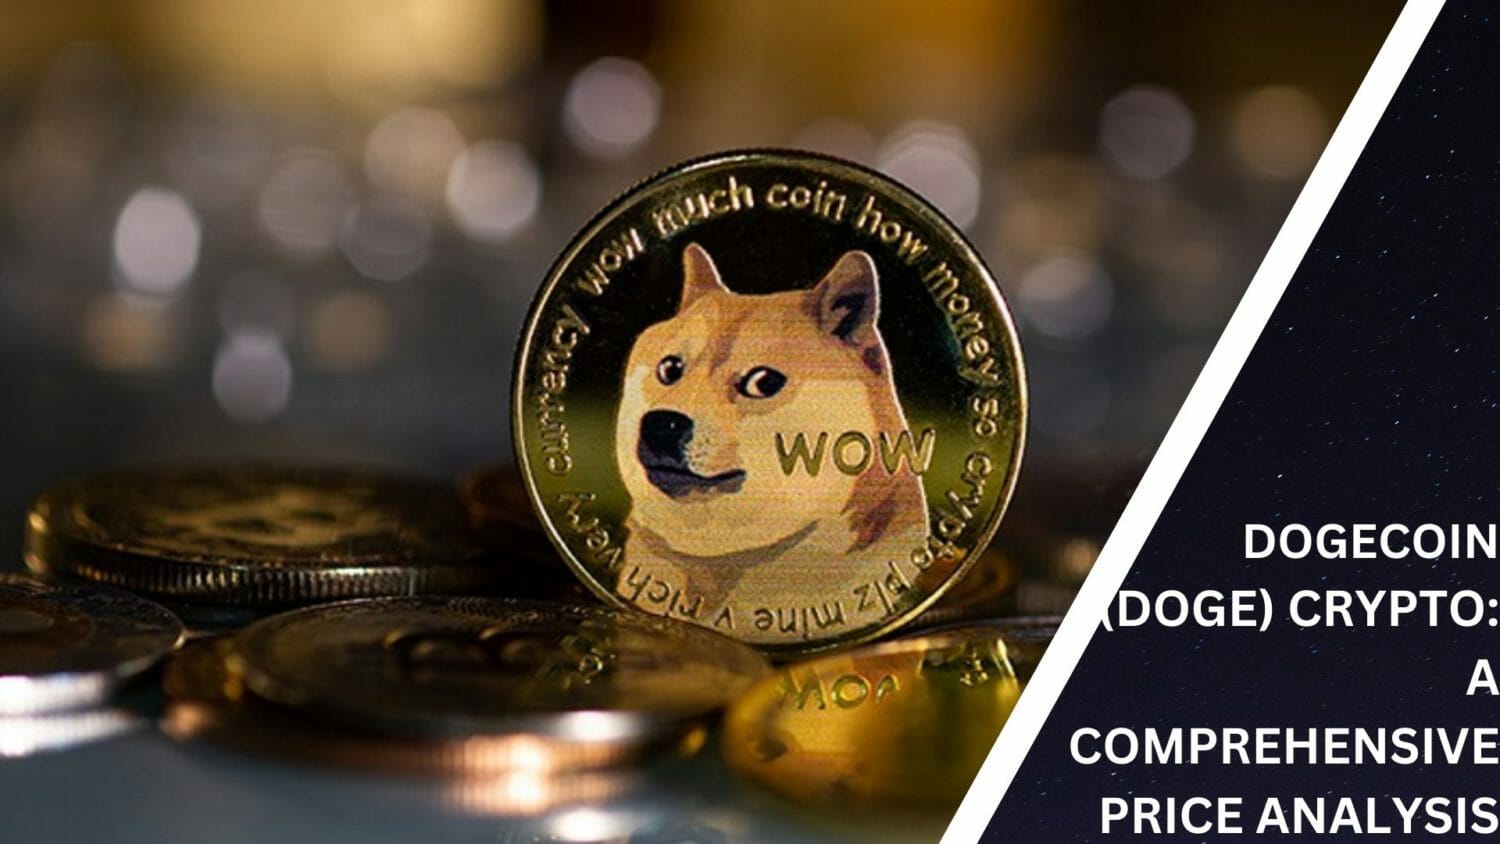 Dogecoin (Doge) Crypto: A Comprehensive Price Analysis